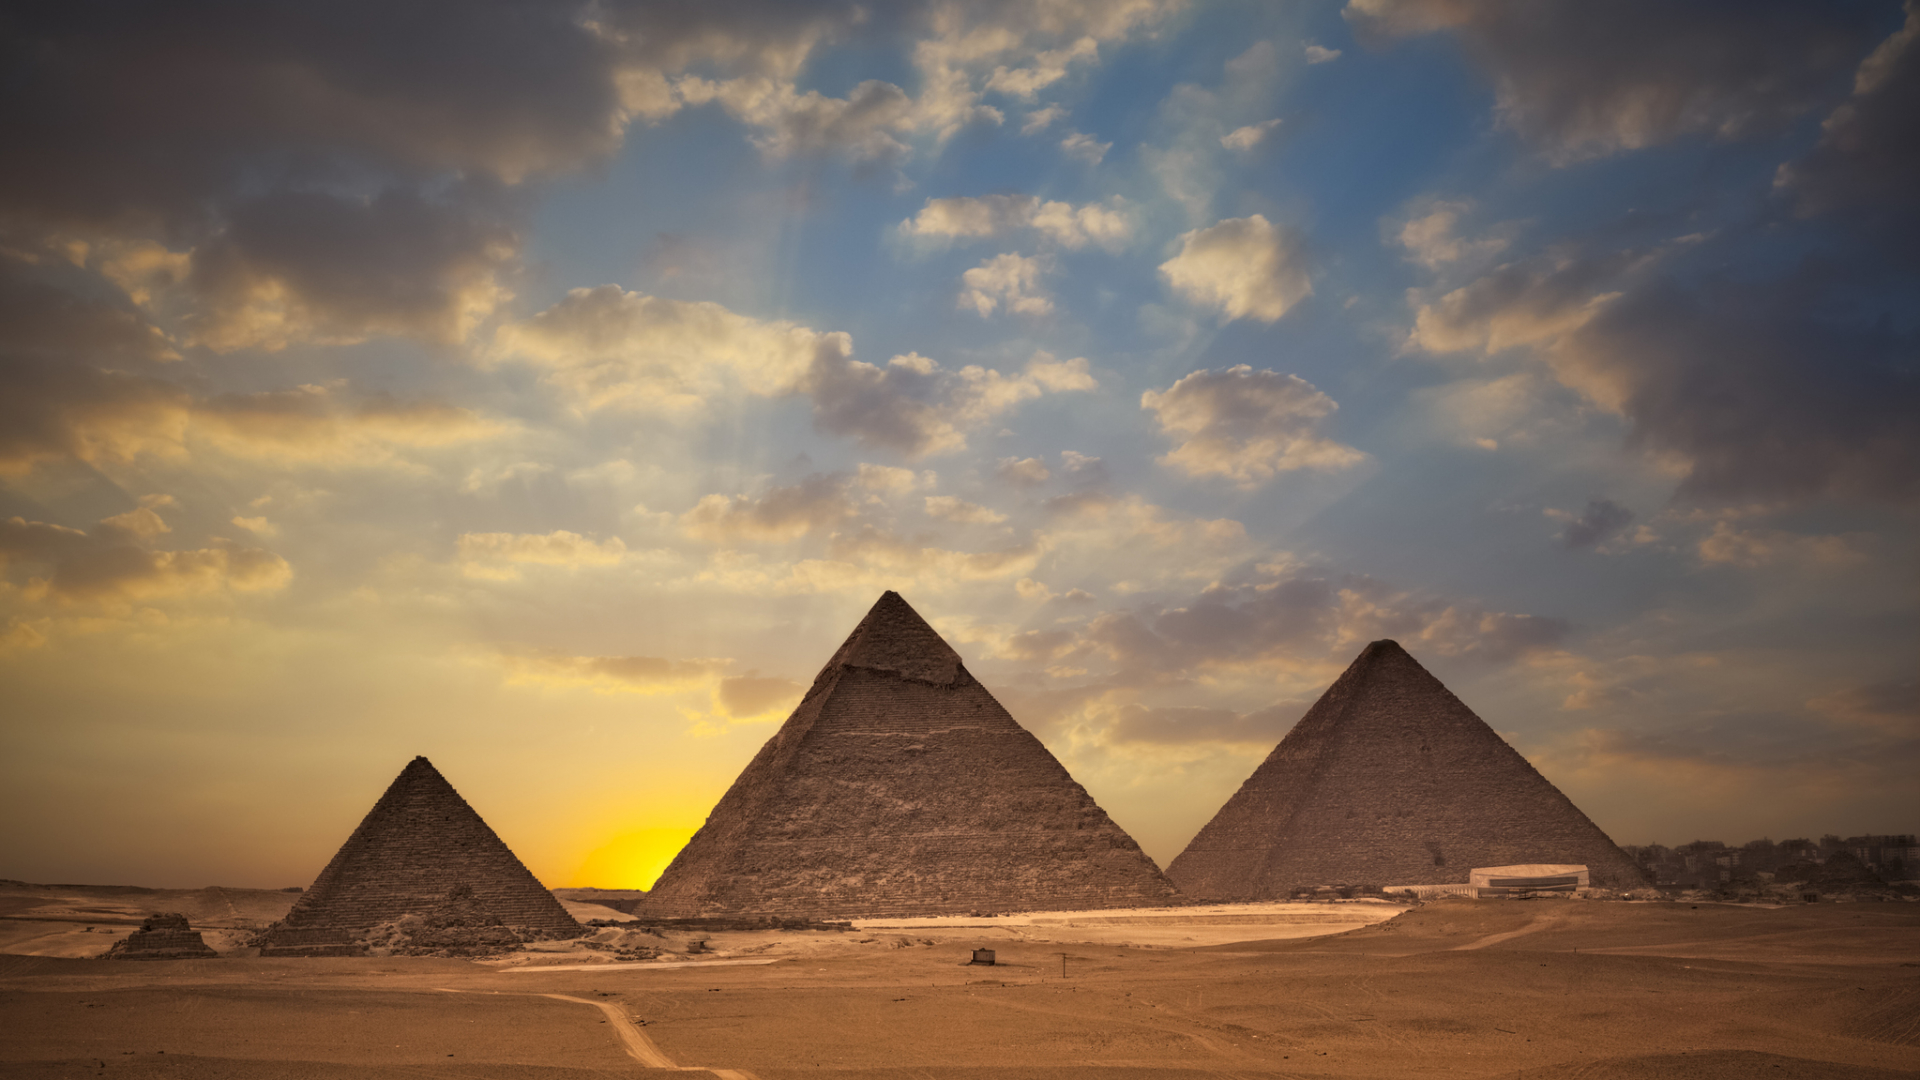 Pyramids of Giza at Sunset